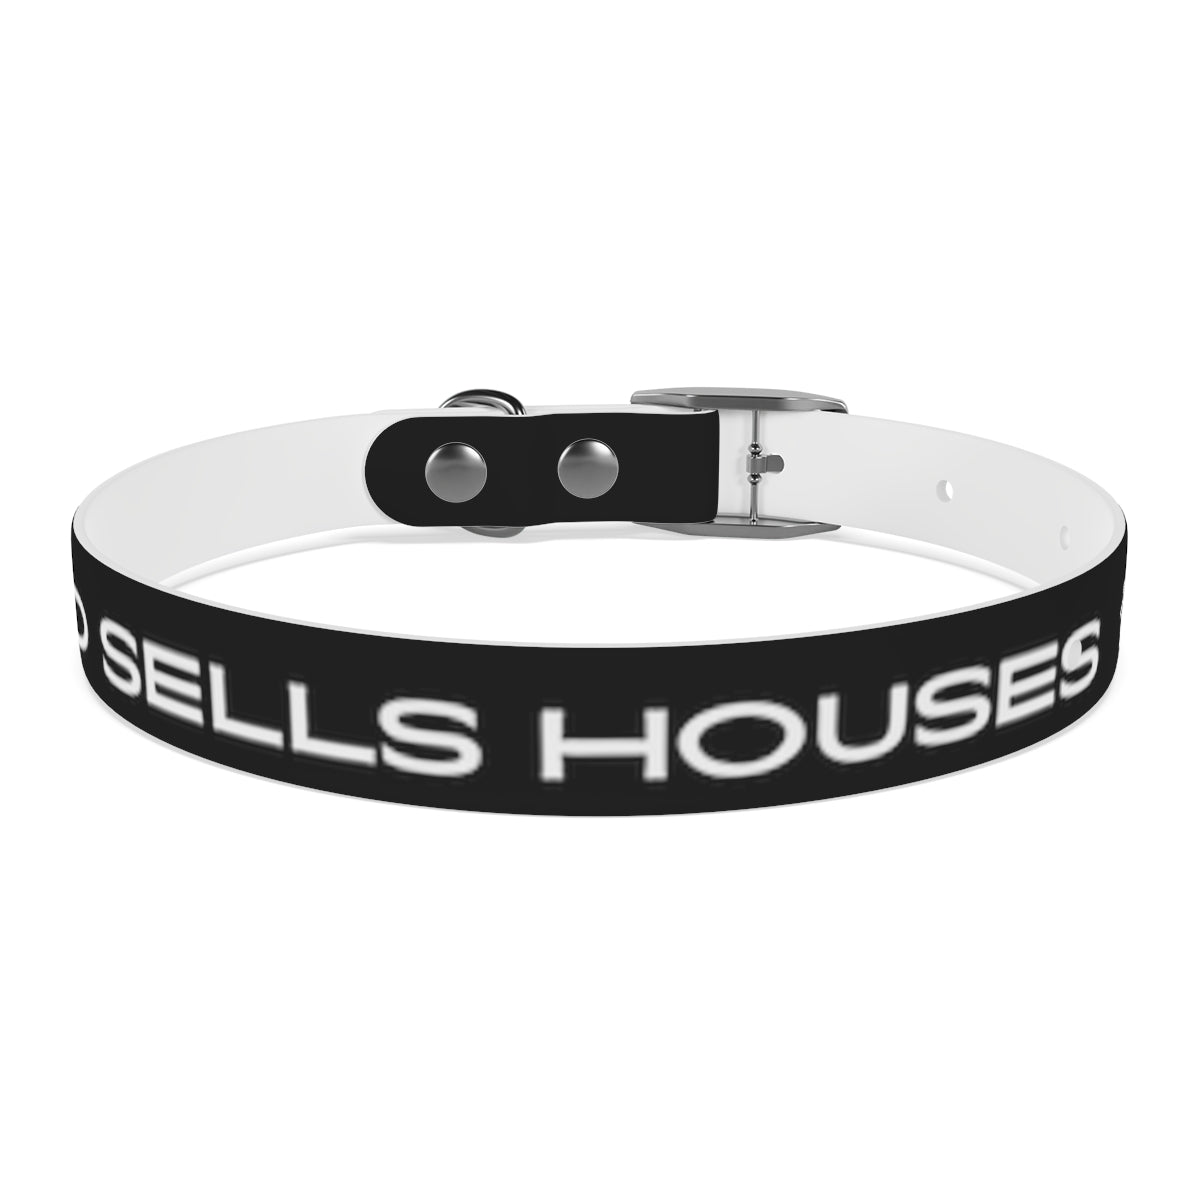 Dog Collar - My Dad Sells Houses - Black